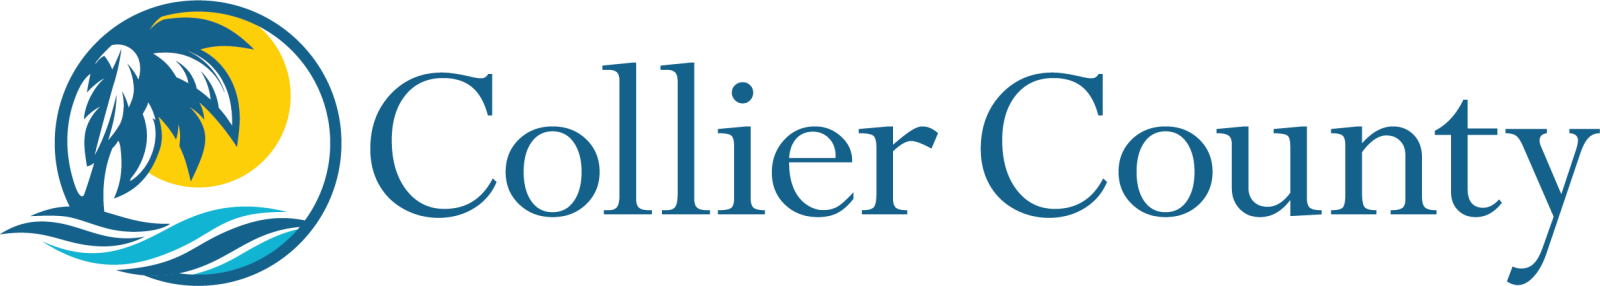 Collier County Web Logo